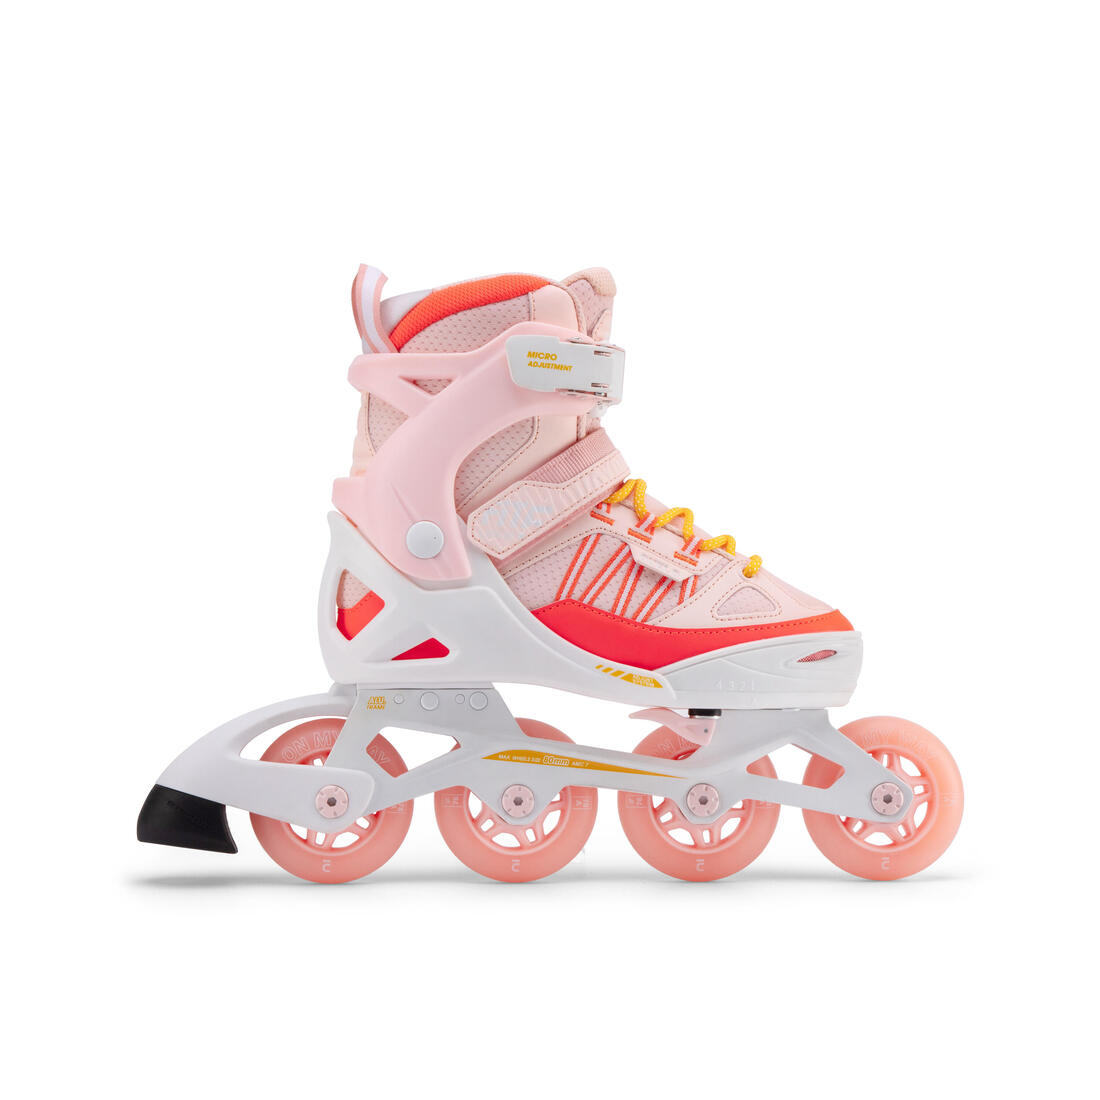 OXELO(オクセロ) インラインスケート スケート靴 FIT5 ジュニア